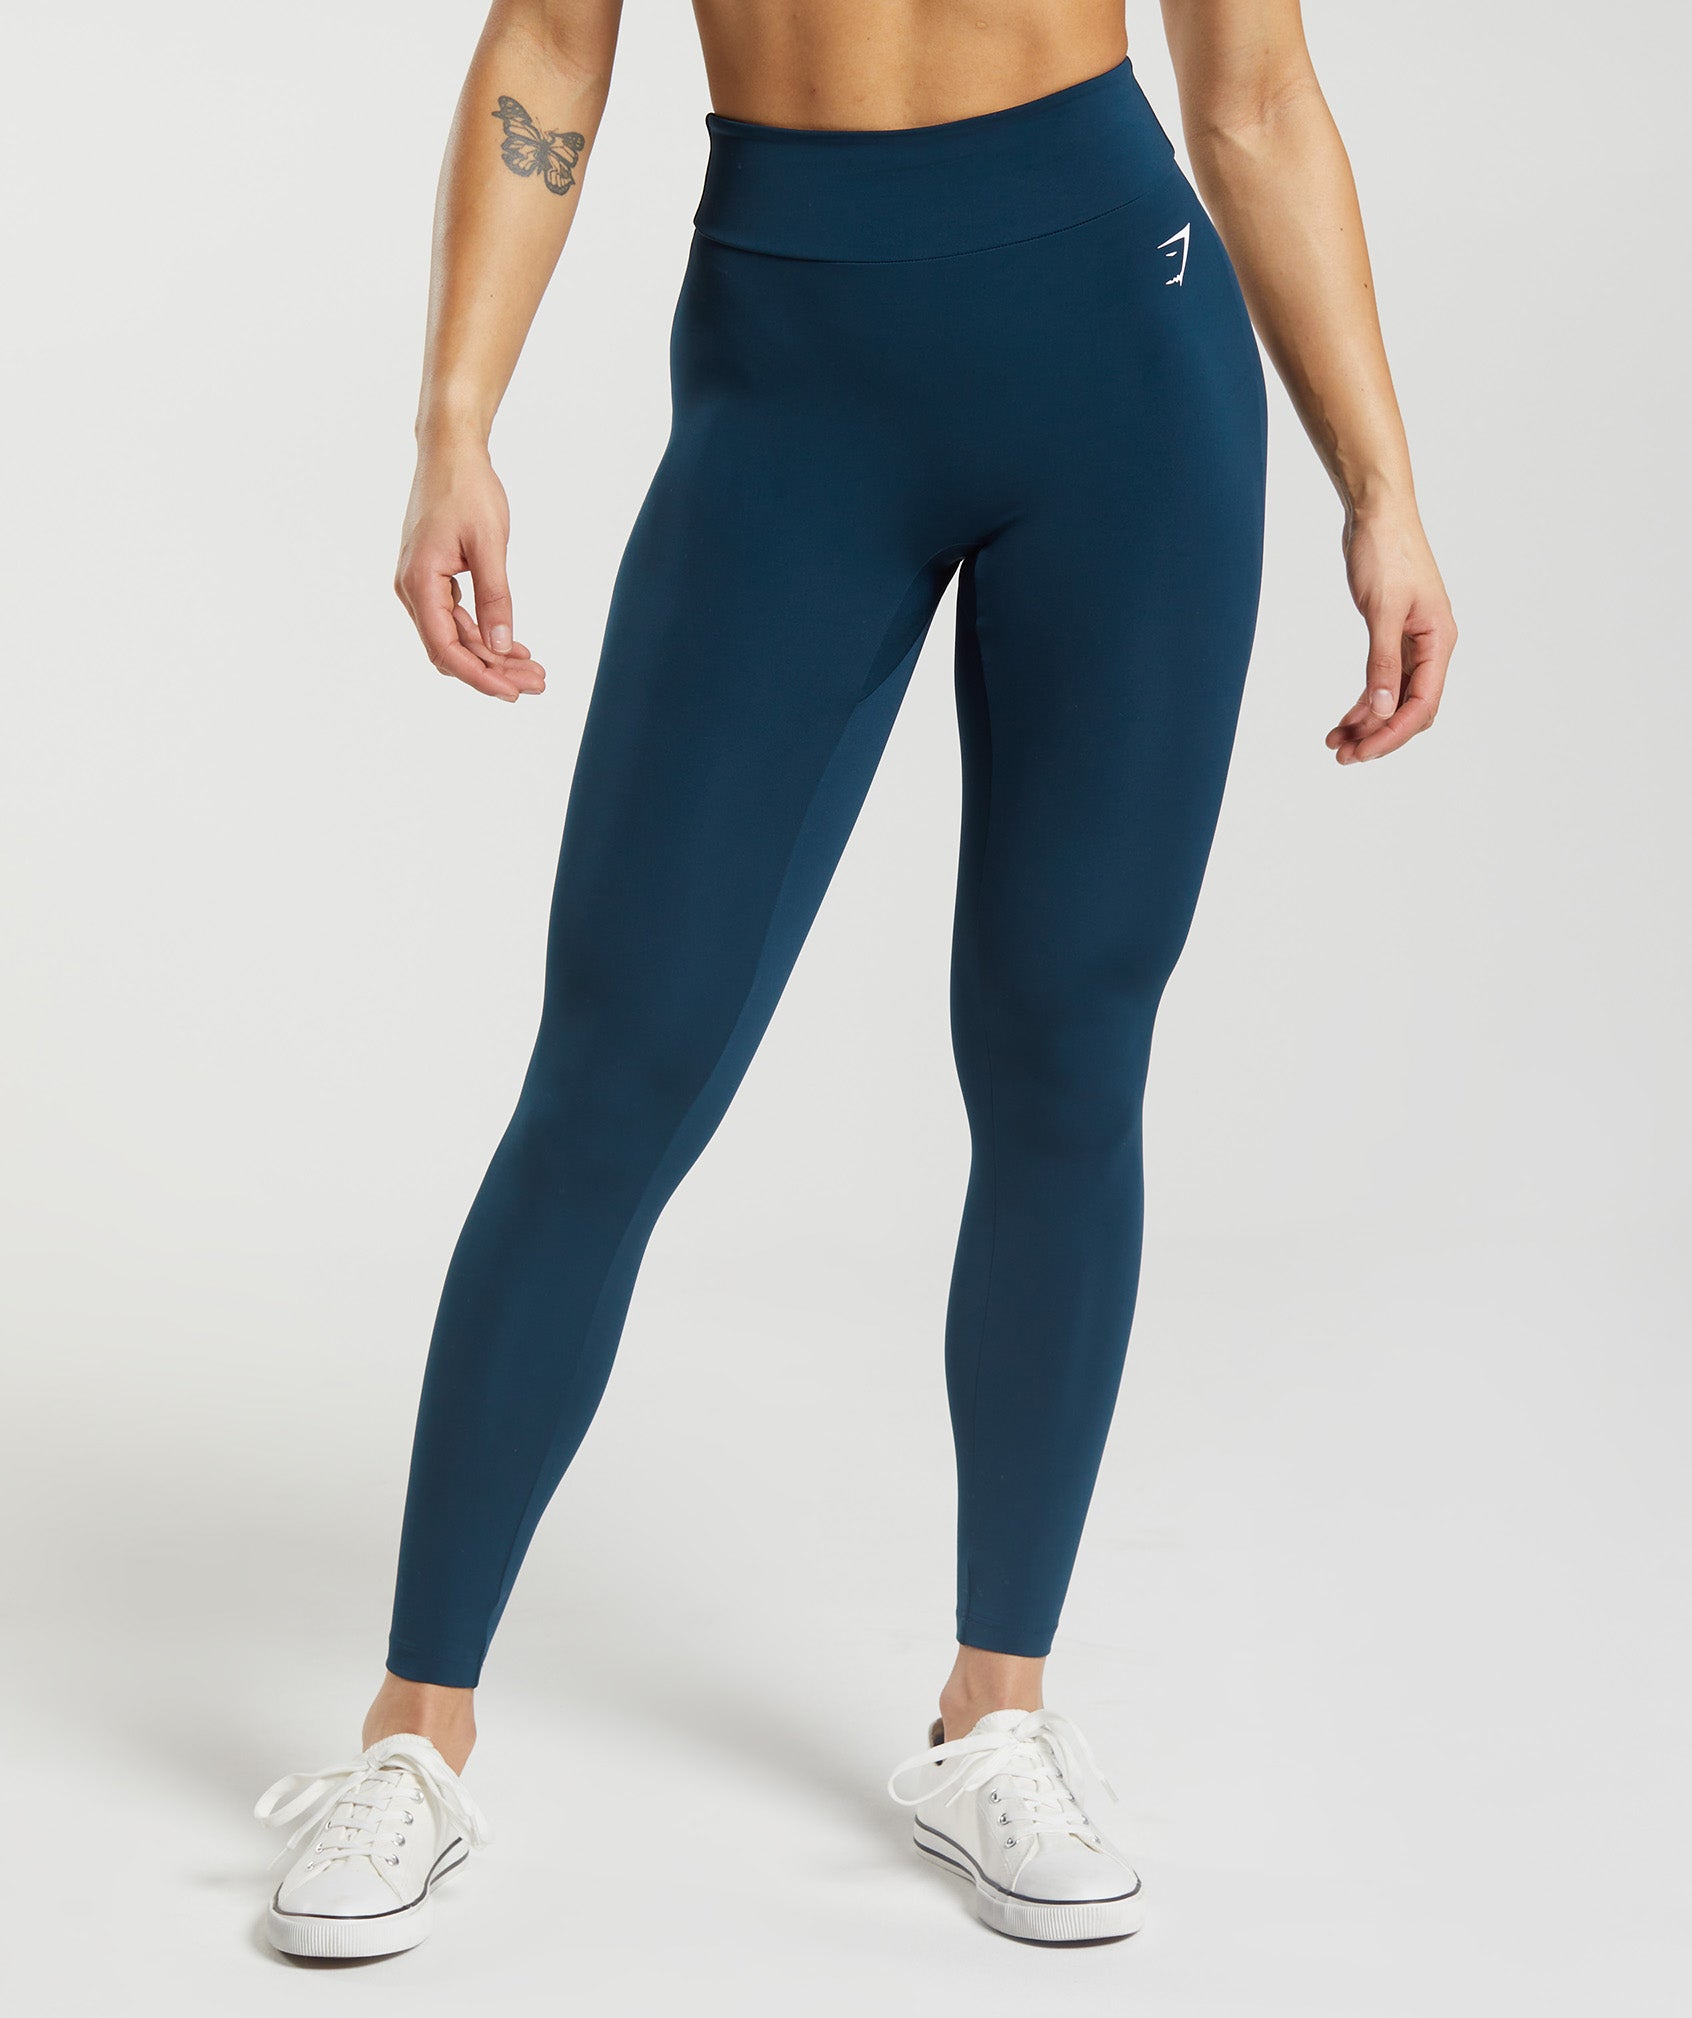 Legimitelywomen's High Waist Yoga Pants - Scrunch Booty Gym Leggings For  Fitness